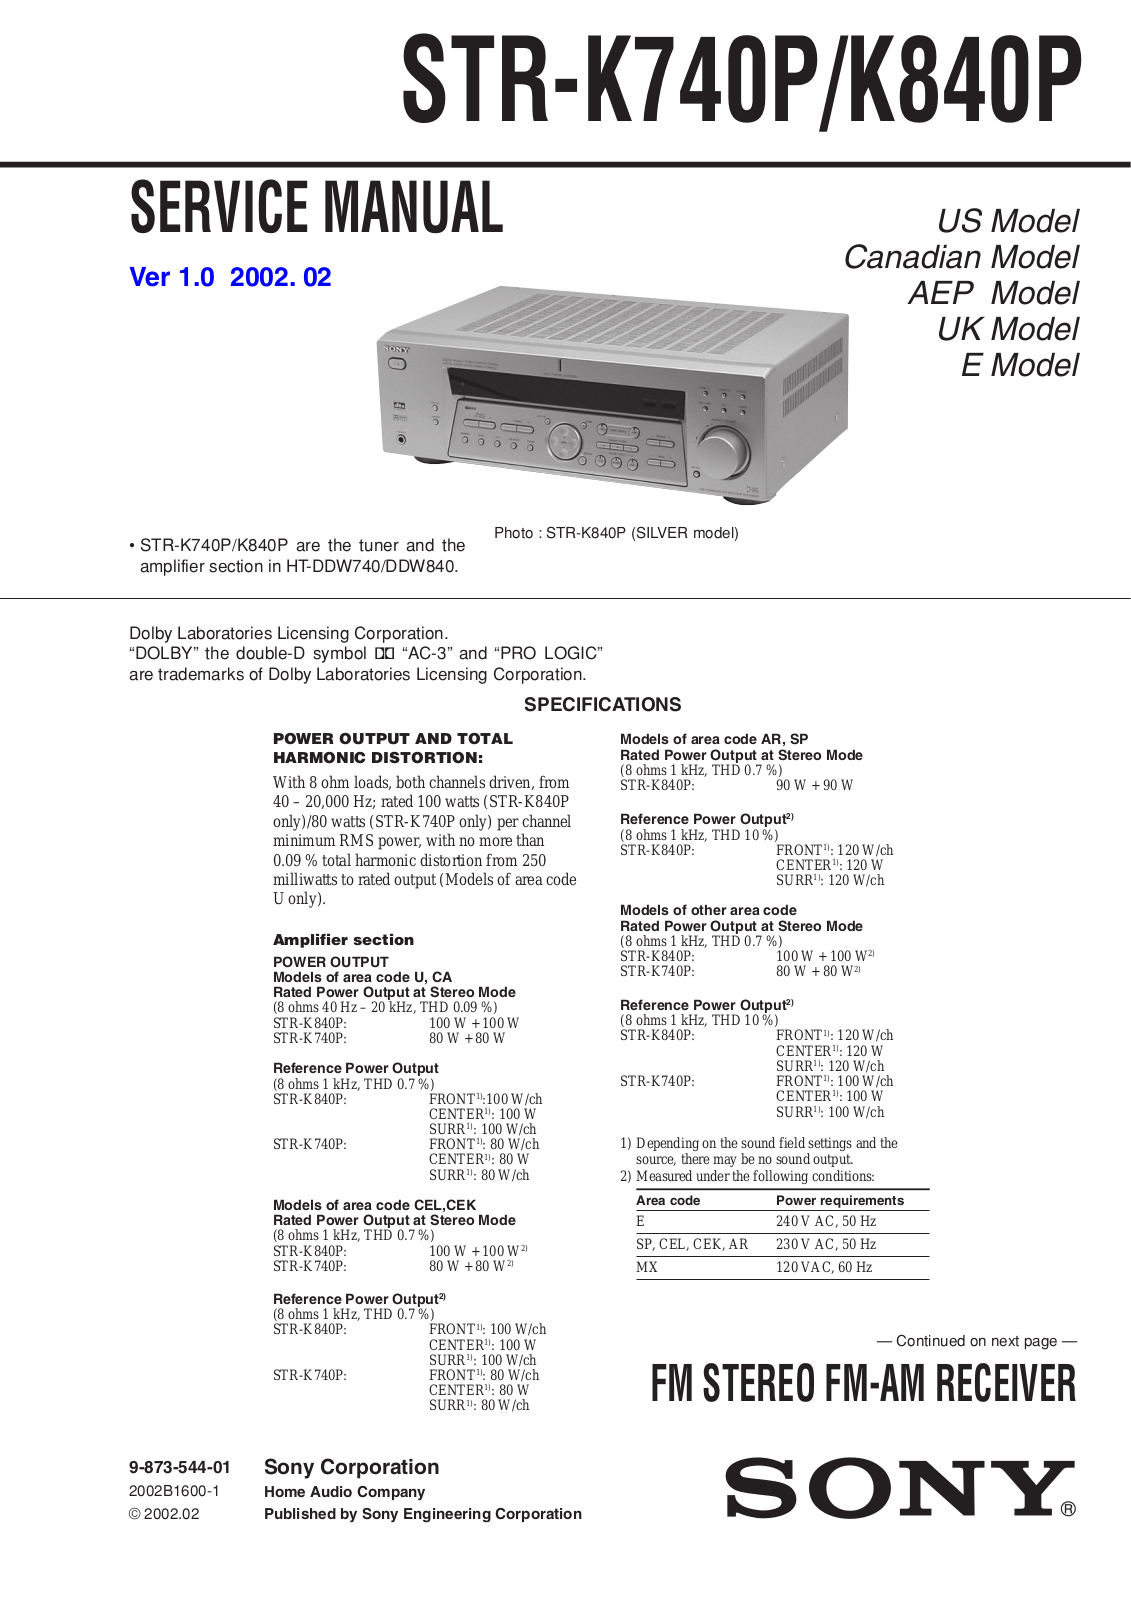 Sony STR K740, STR 840P Service Manual